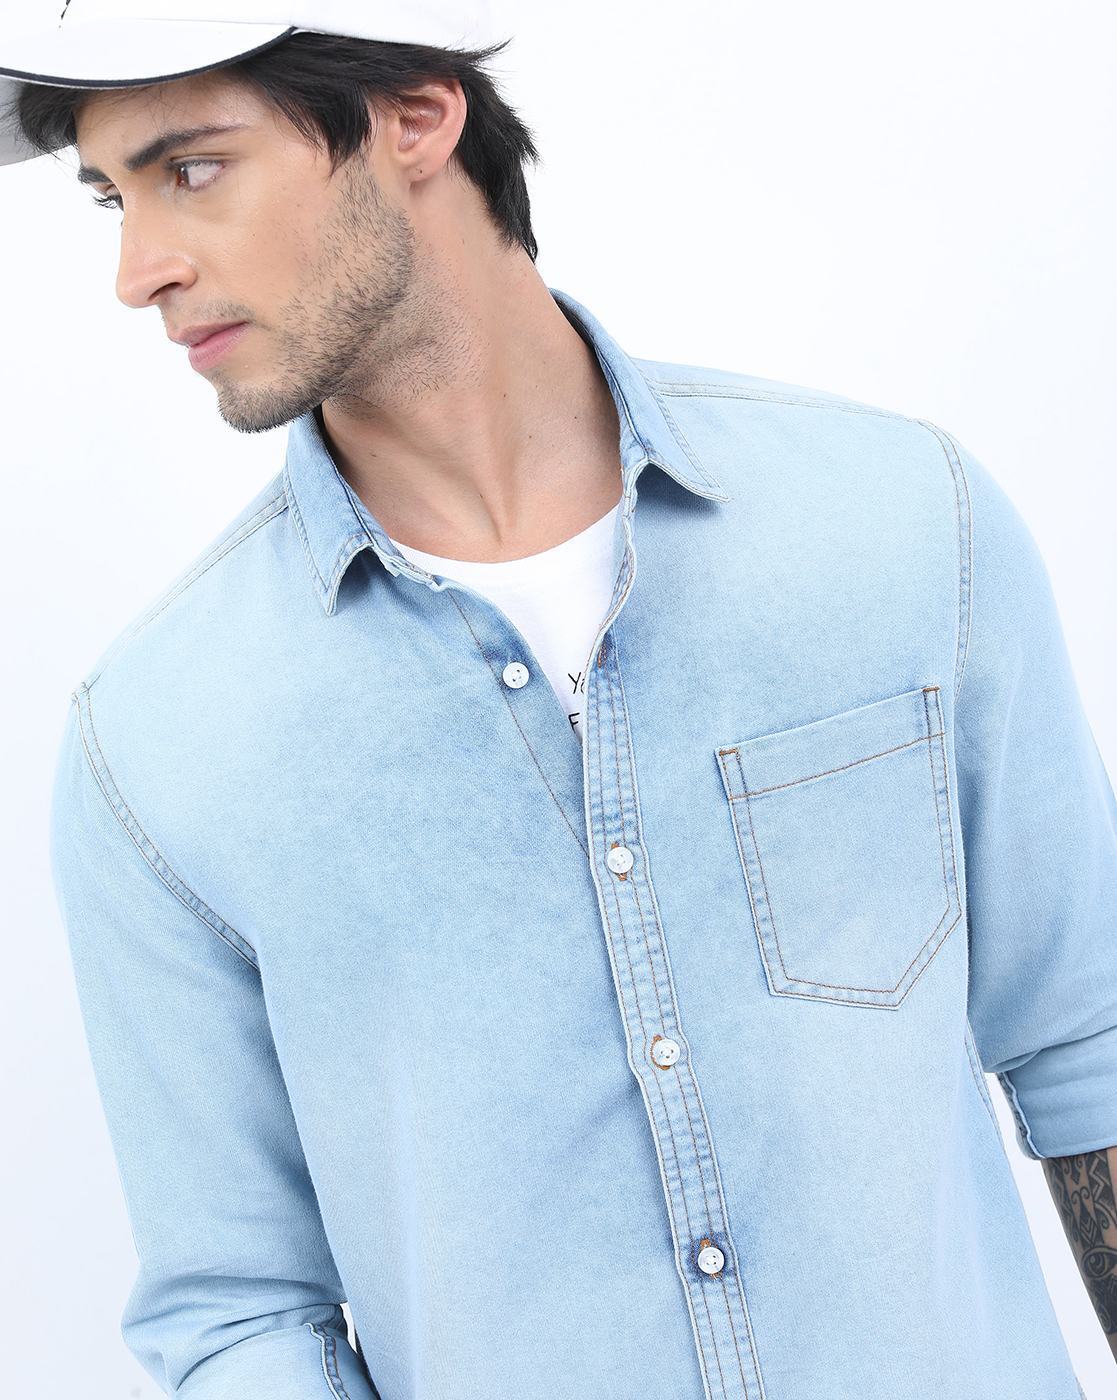 Buy Stylish Turquoise Blue Denim Shirt Men Online in India – VUDU